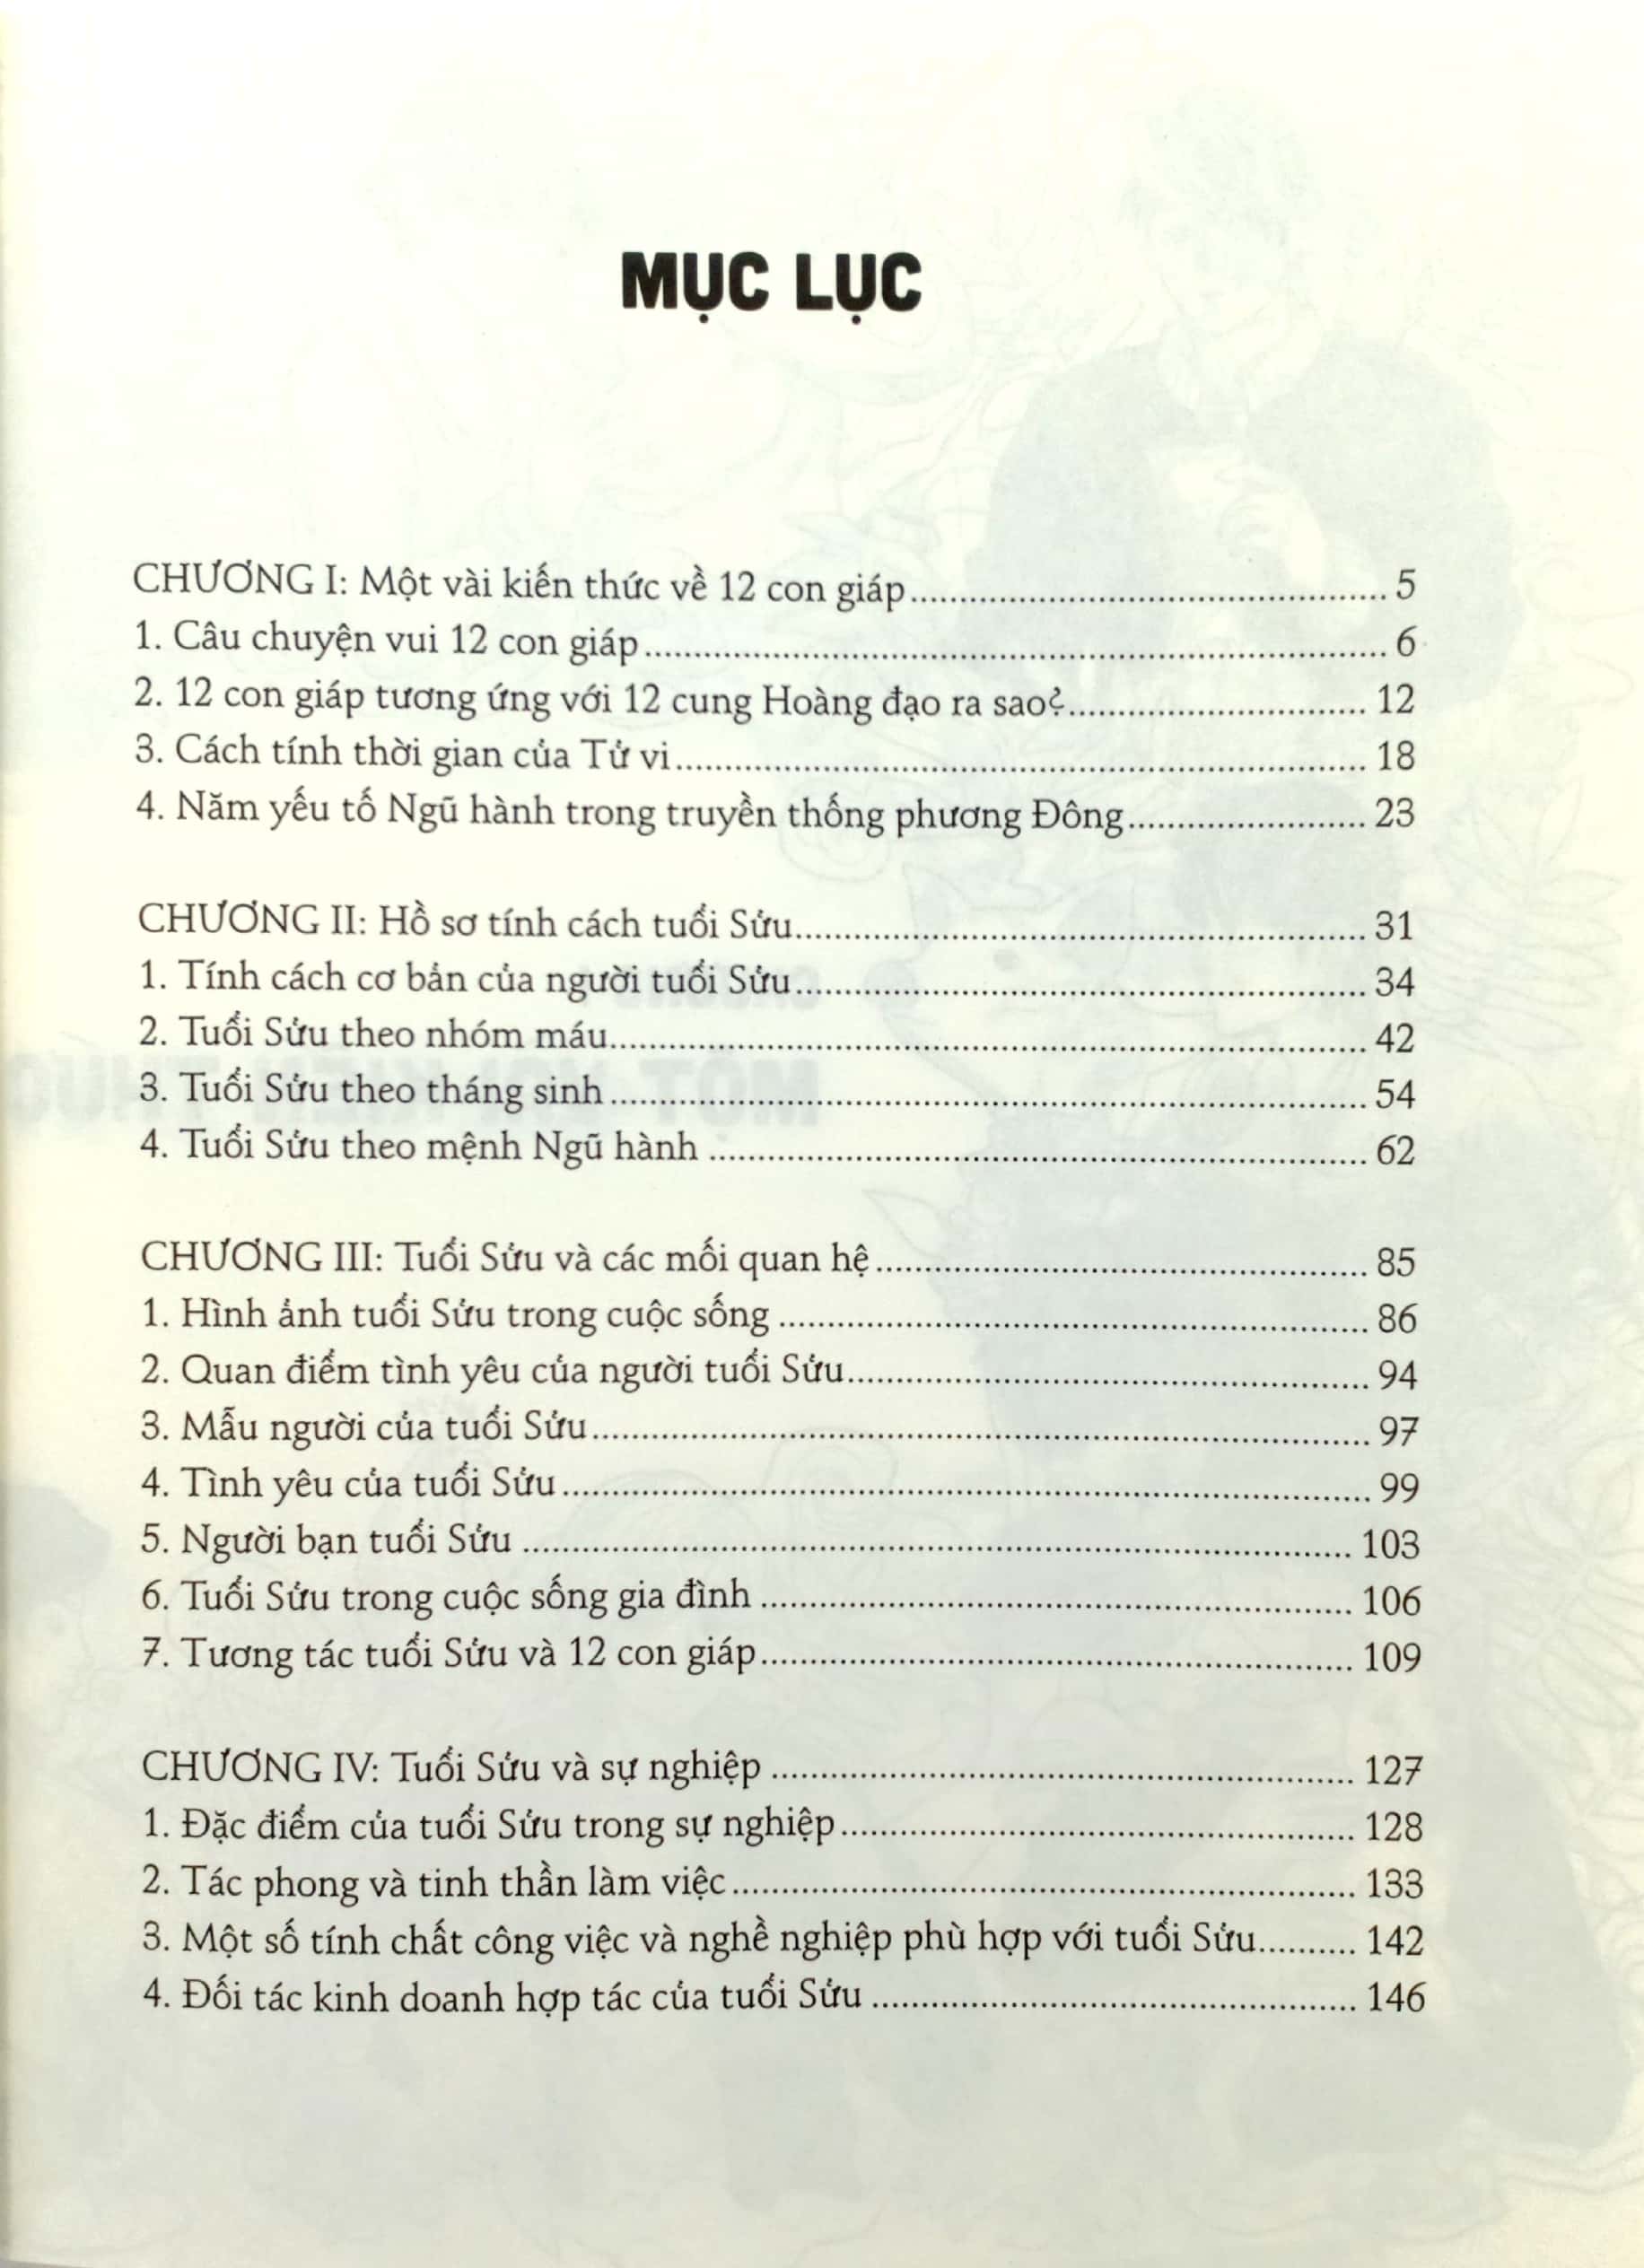 Hồ Sơ Tính Cách 12 Con Giáp - Bí Mật Tuổi Sửu - Tặng Kèm Postcard PDF